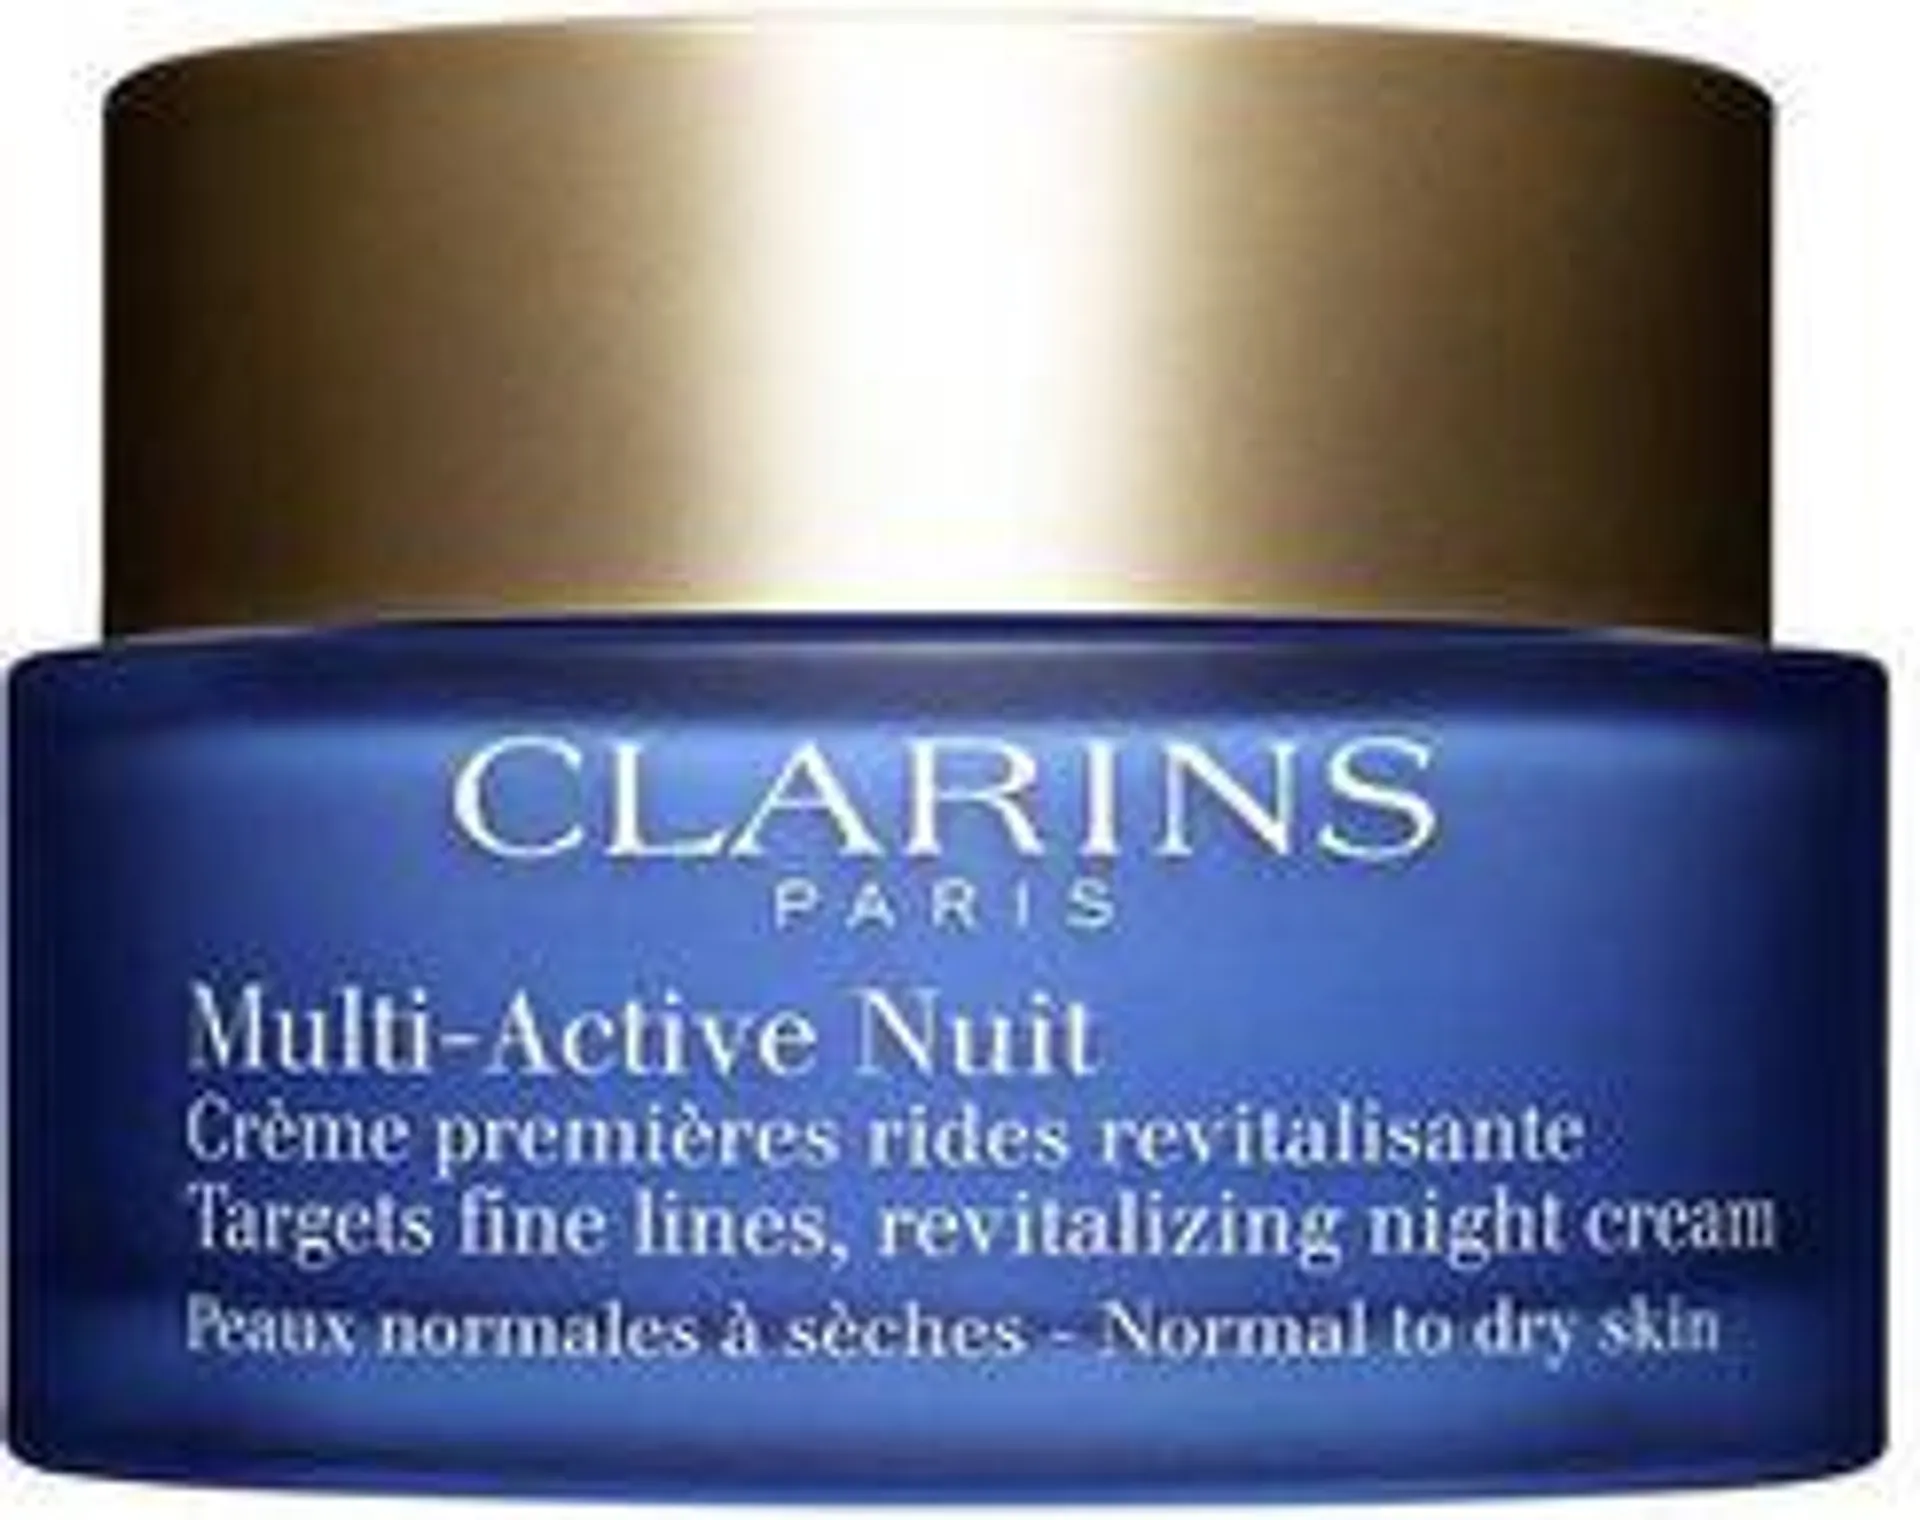 CLARINS Multi-Active Nuit krem dla skóry normalnej i suchej 50ml